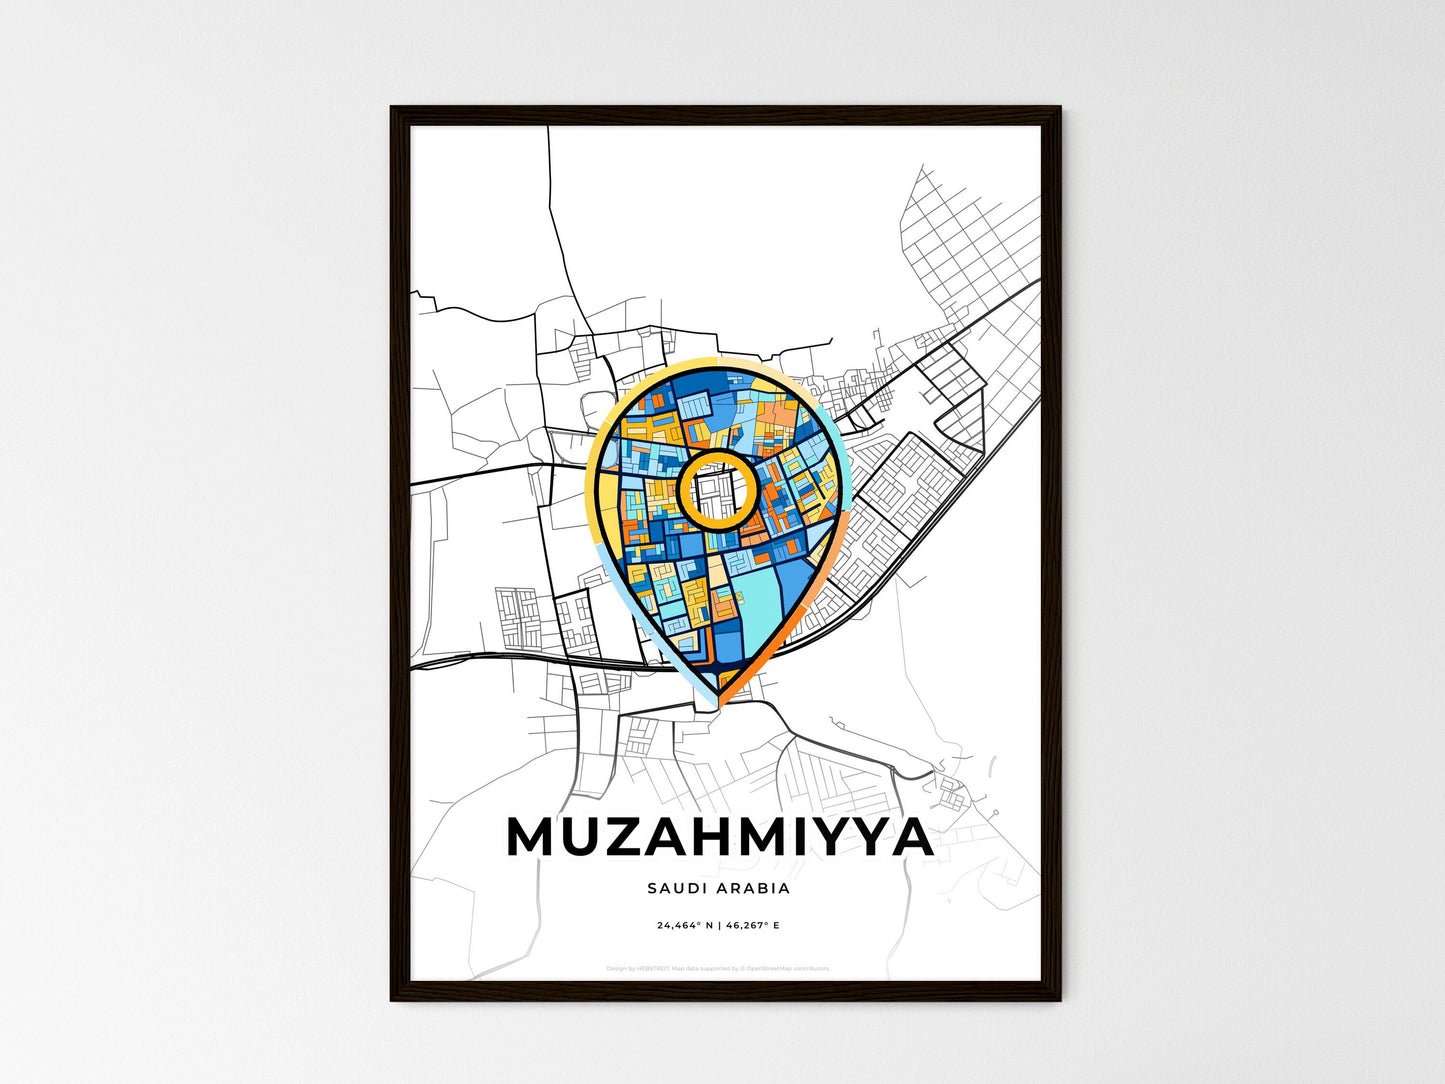 MUZAHMIYYA SAUDI ARABIA minimal art map with a colorful icon. Style 1